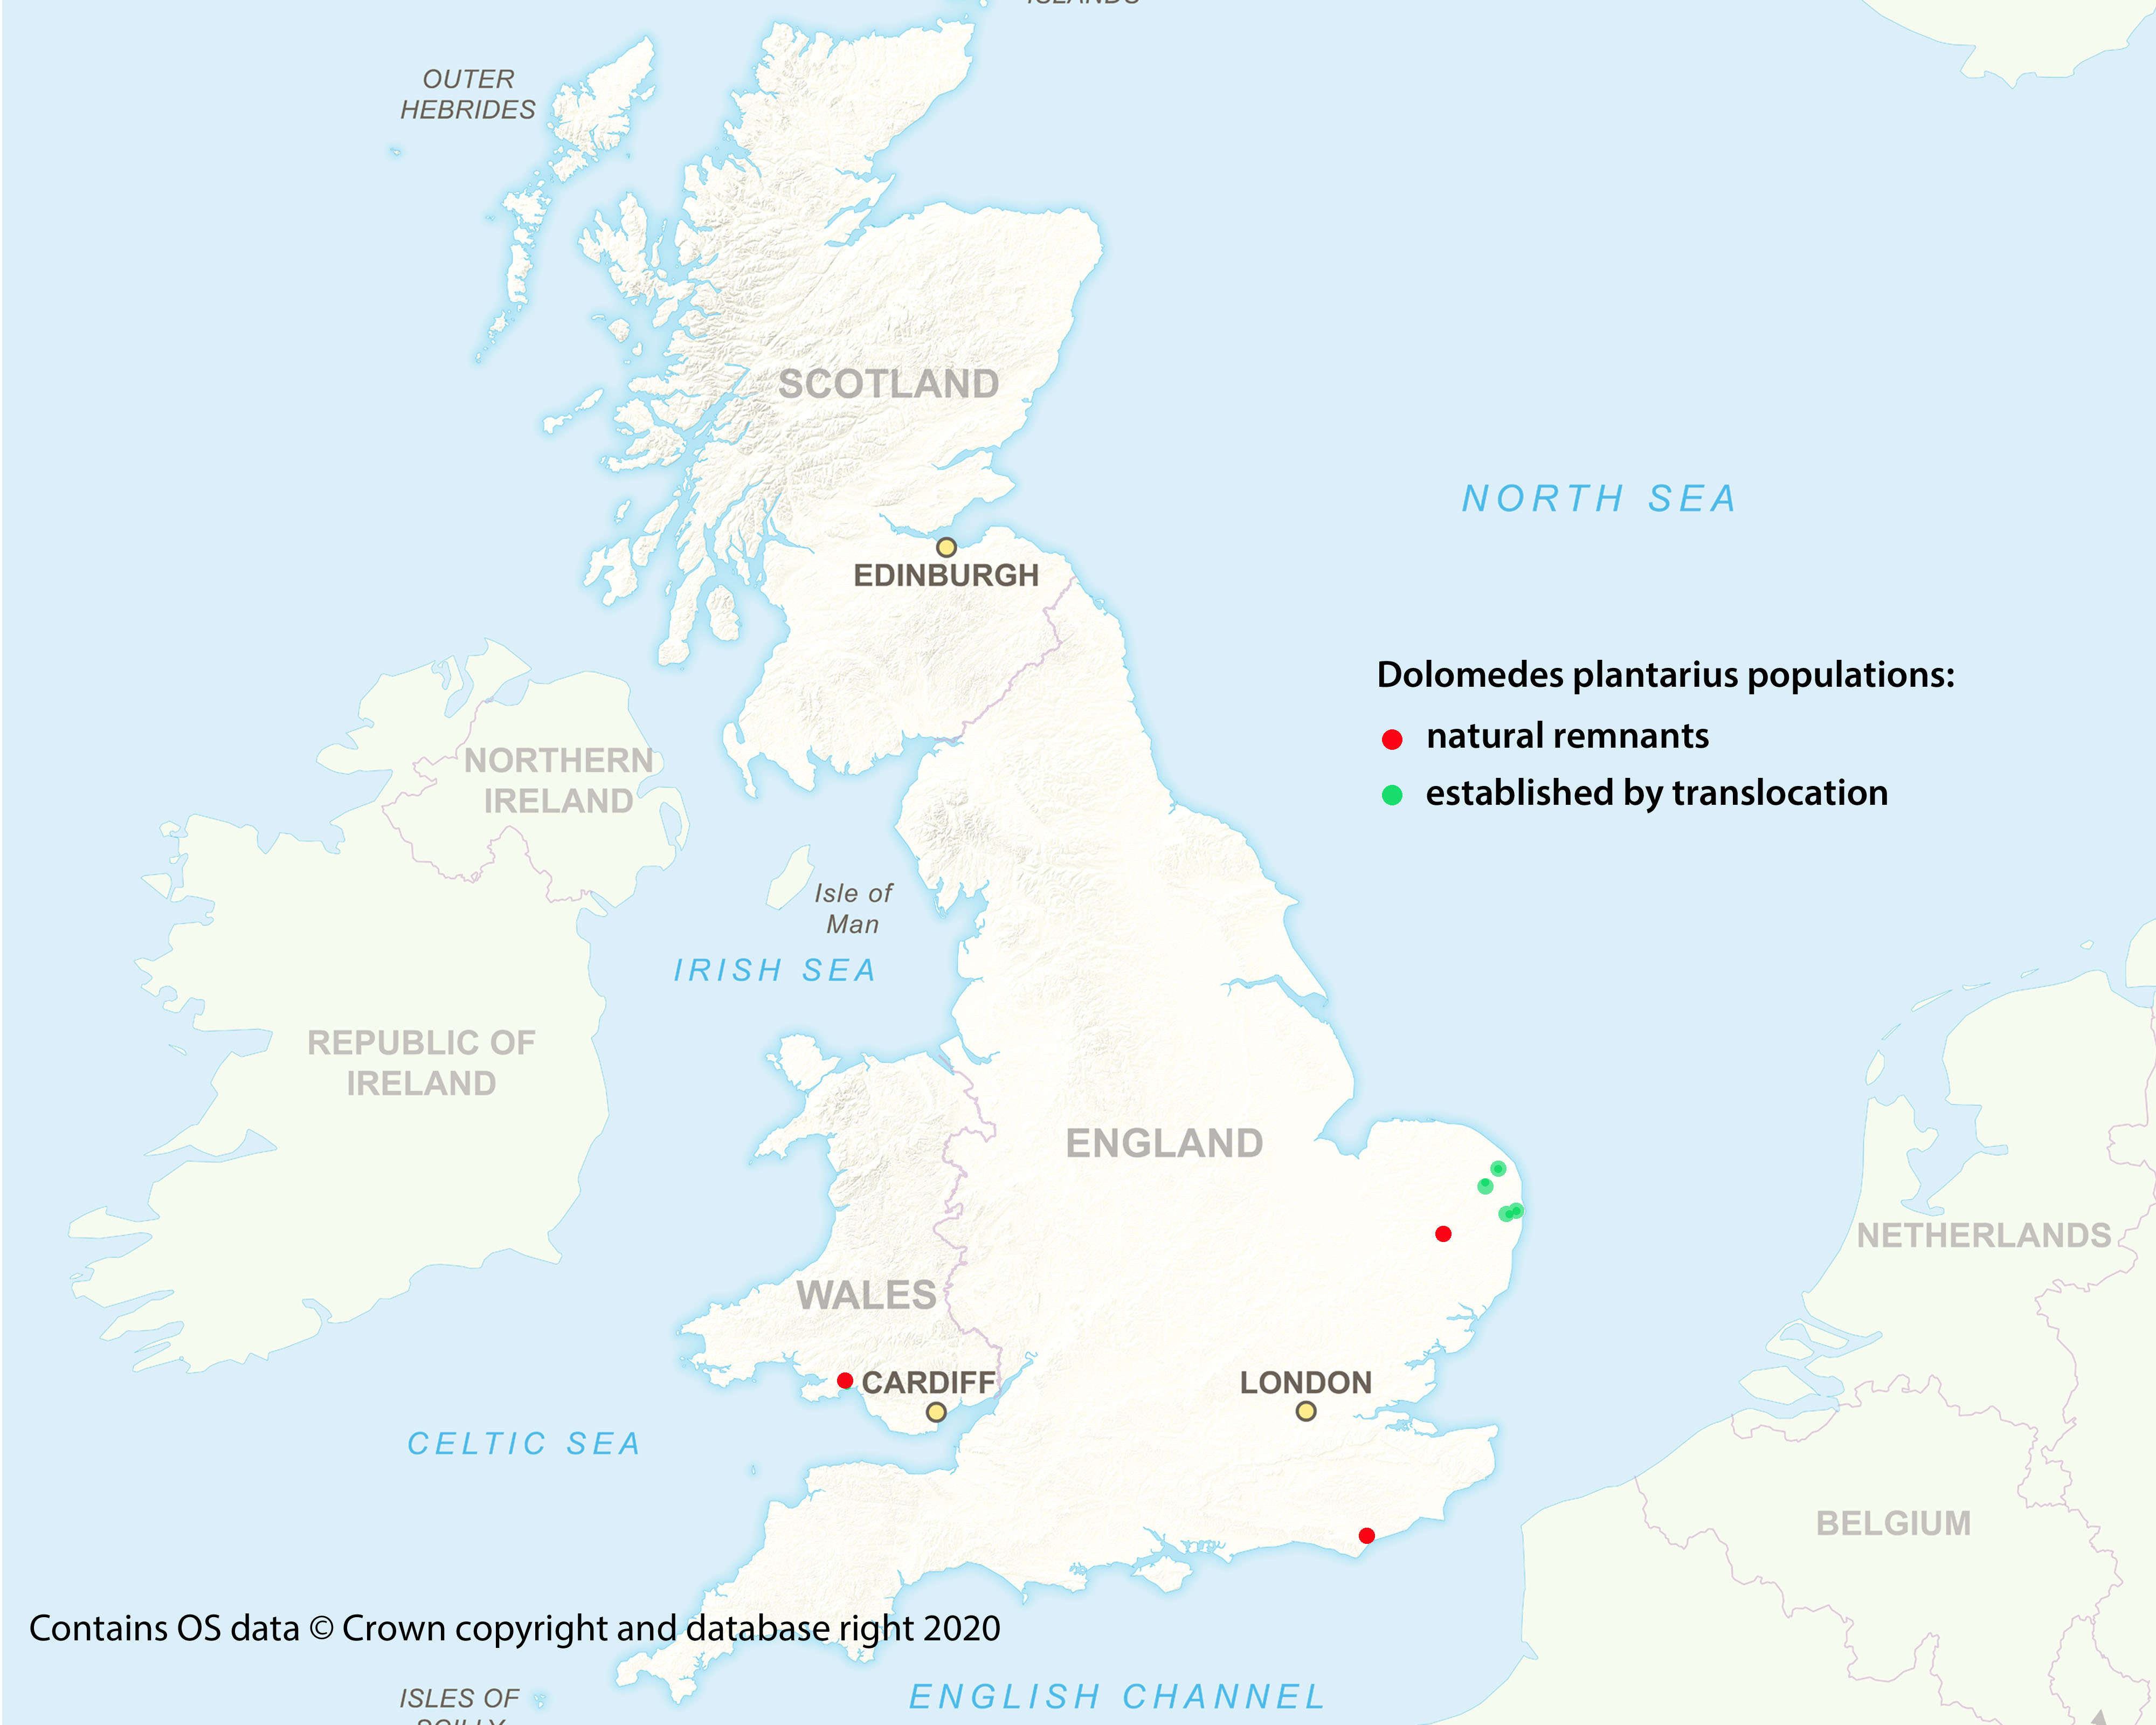 Locations of Dolomedes plantarius populations in Britain